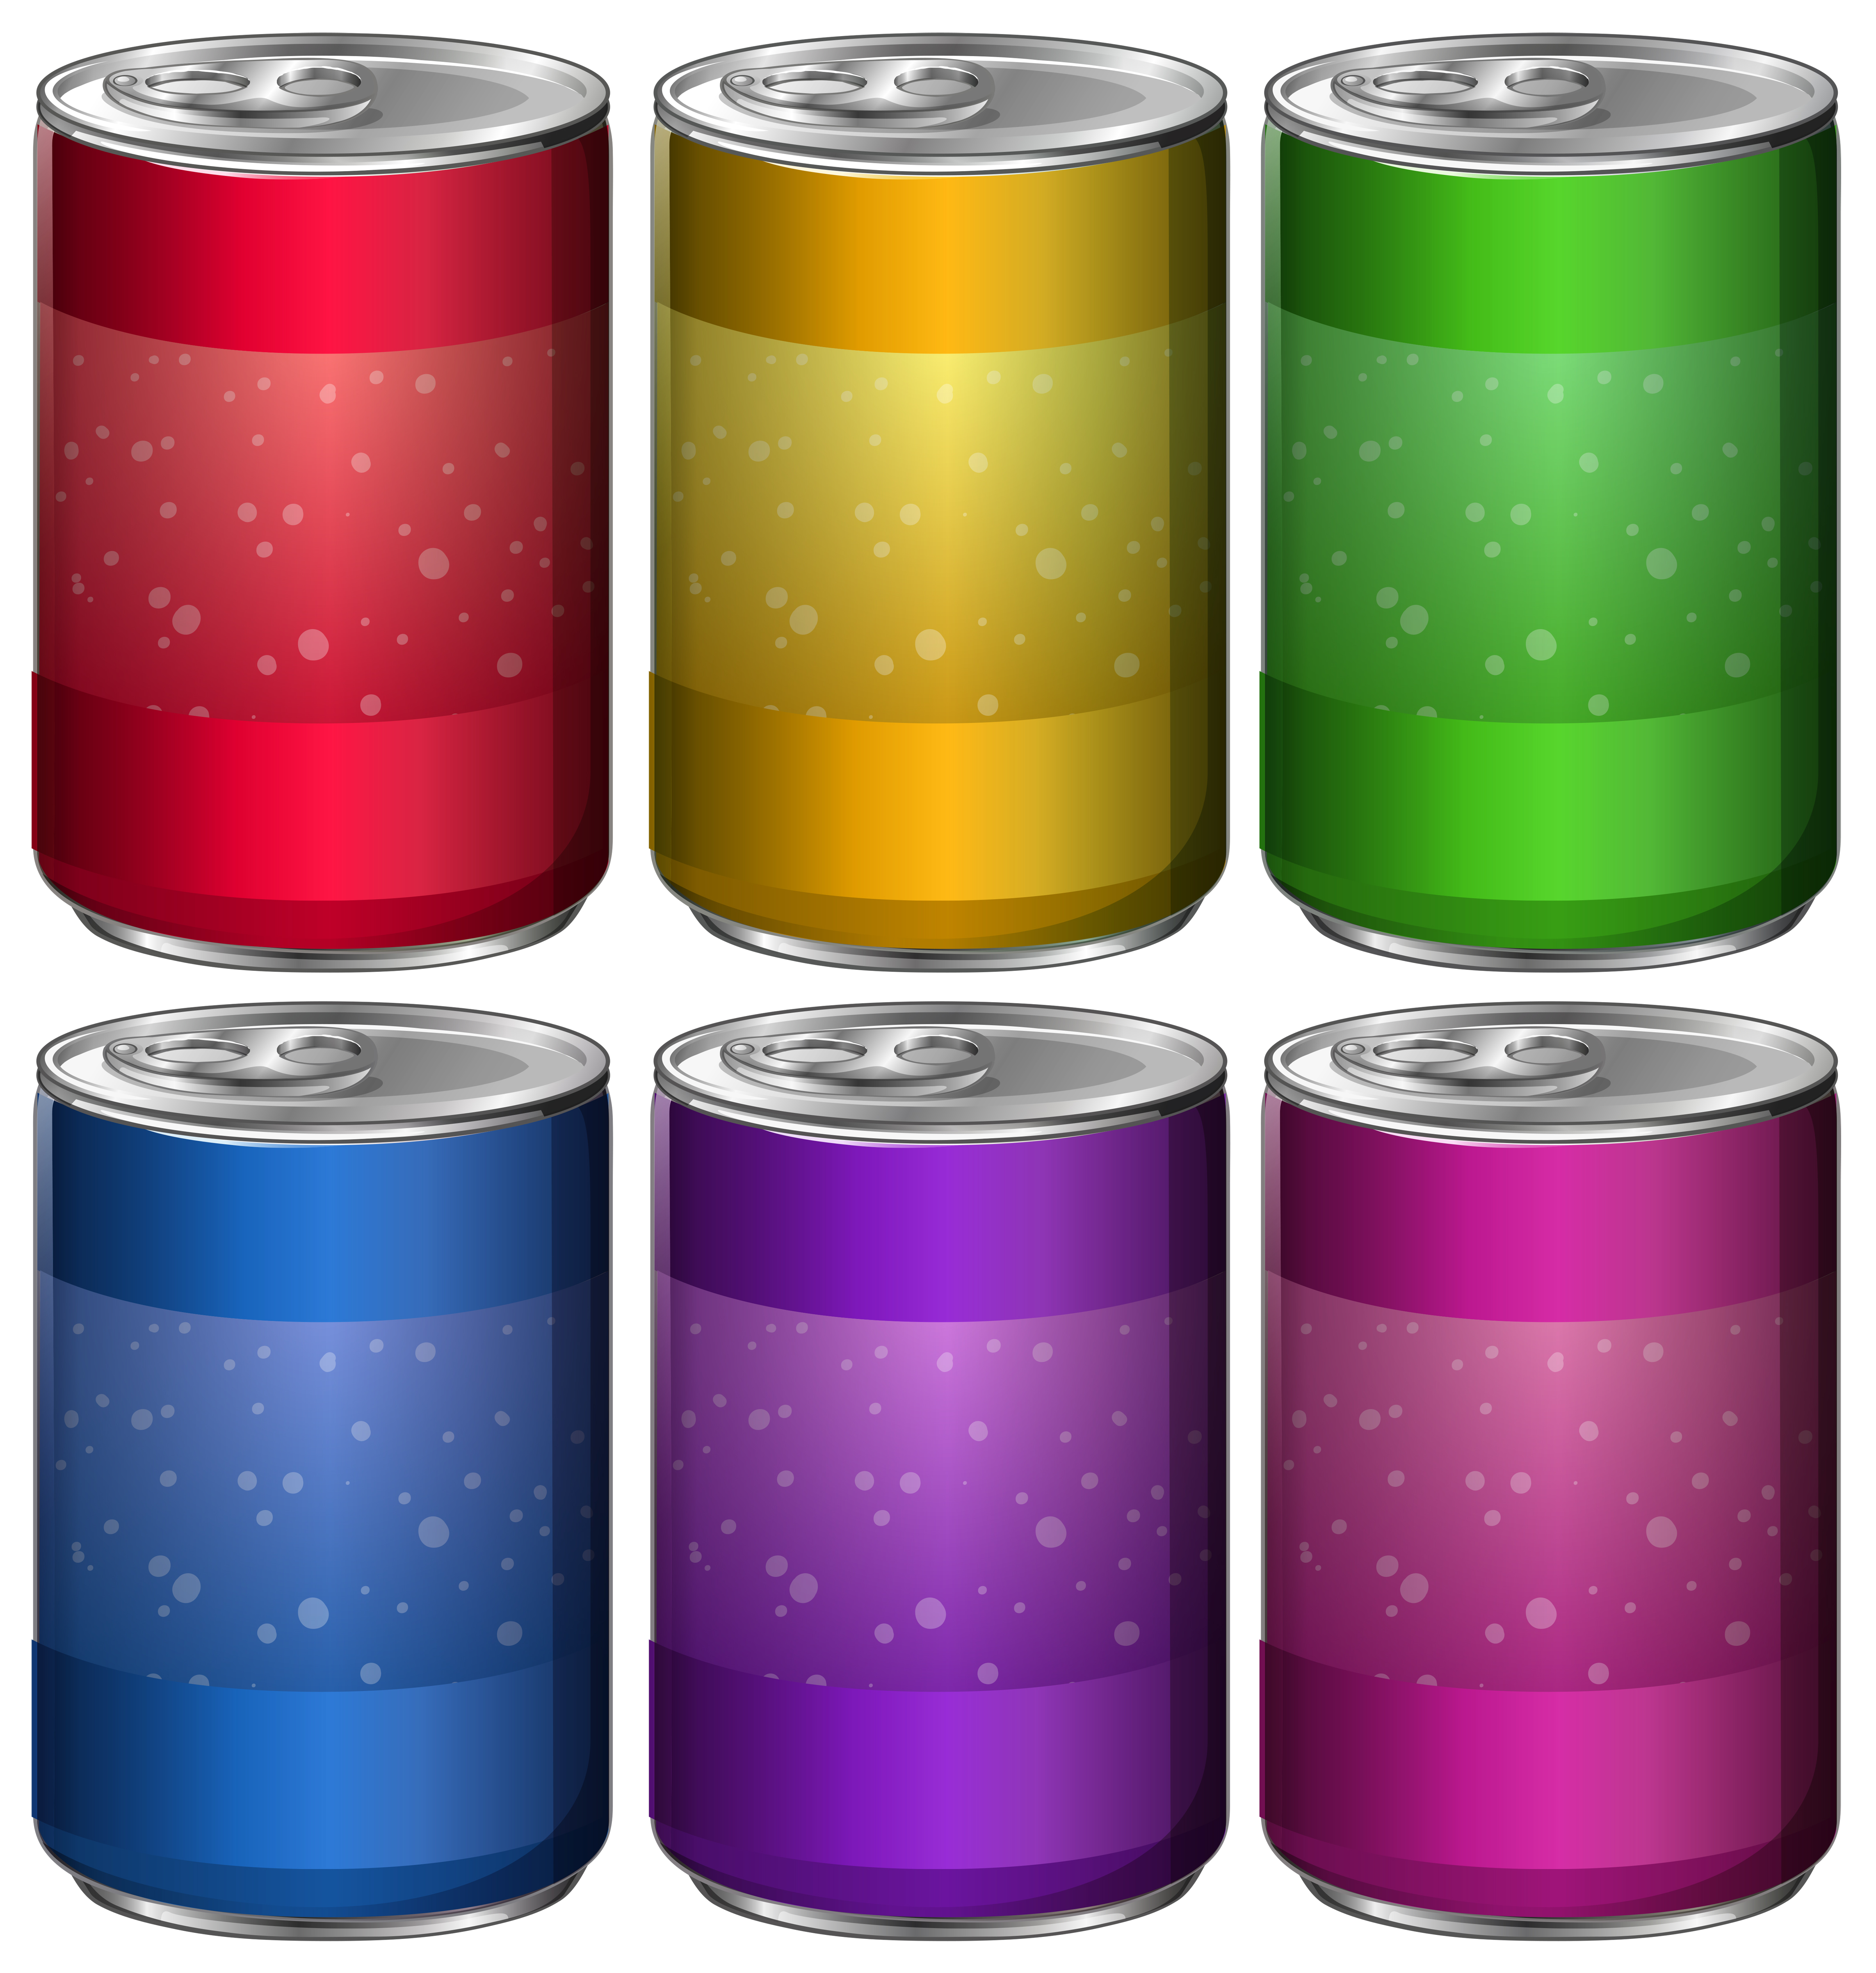 Download Aluminum Cans In Six Different Colors Download Free Vectors Clipart Graphics Vector Art Yellowimages Mockups